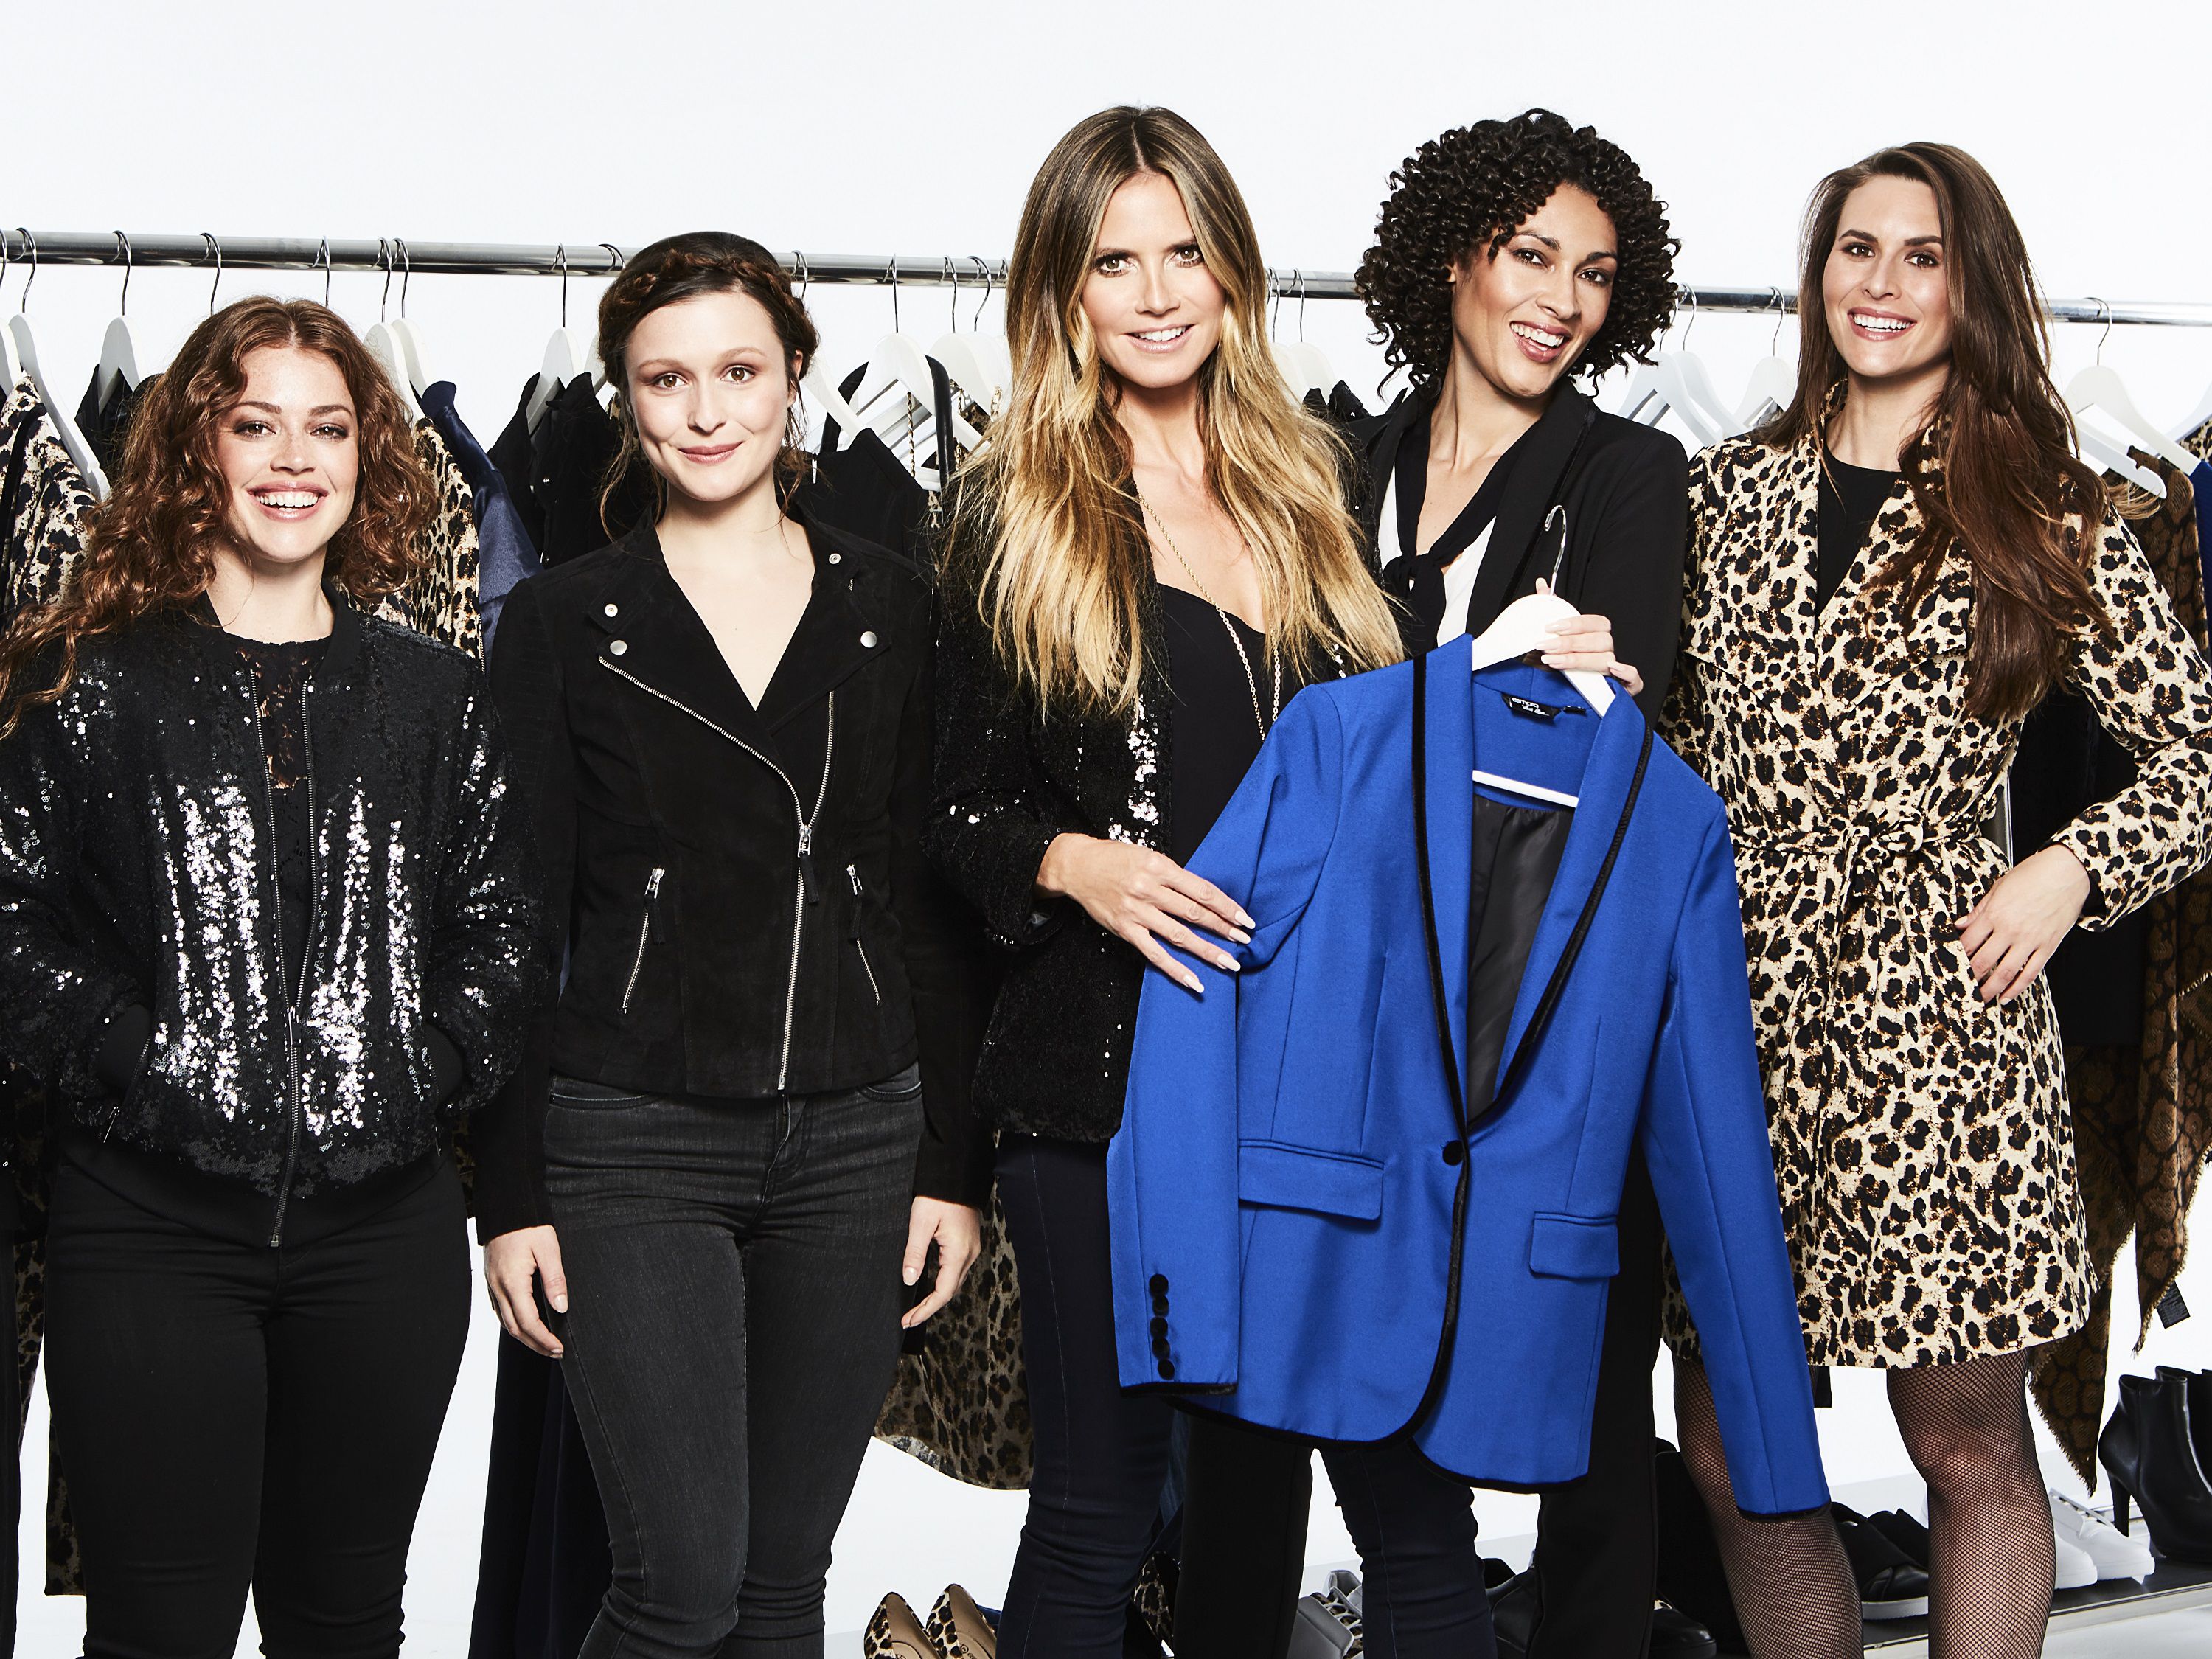 #LETSWOW – Lidl i Heidi Klum predstavljaju globalnu suradnju na New  York Fashion Week-u